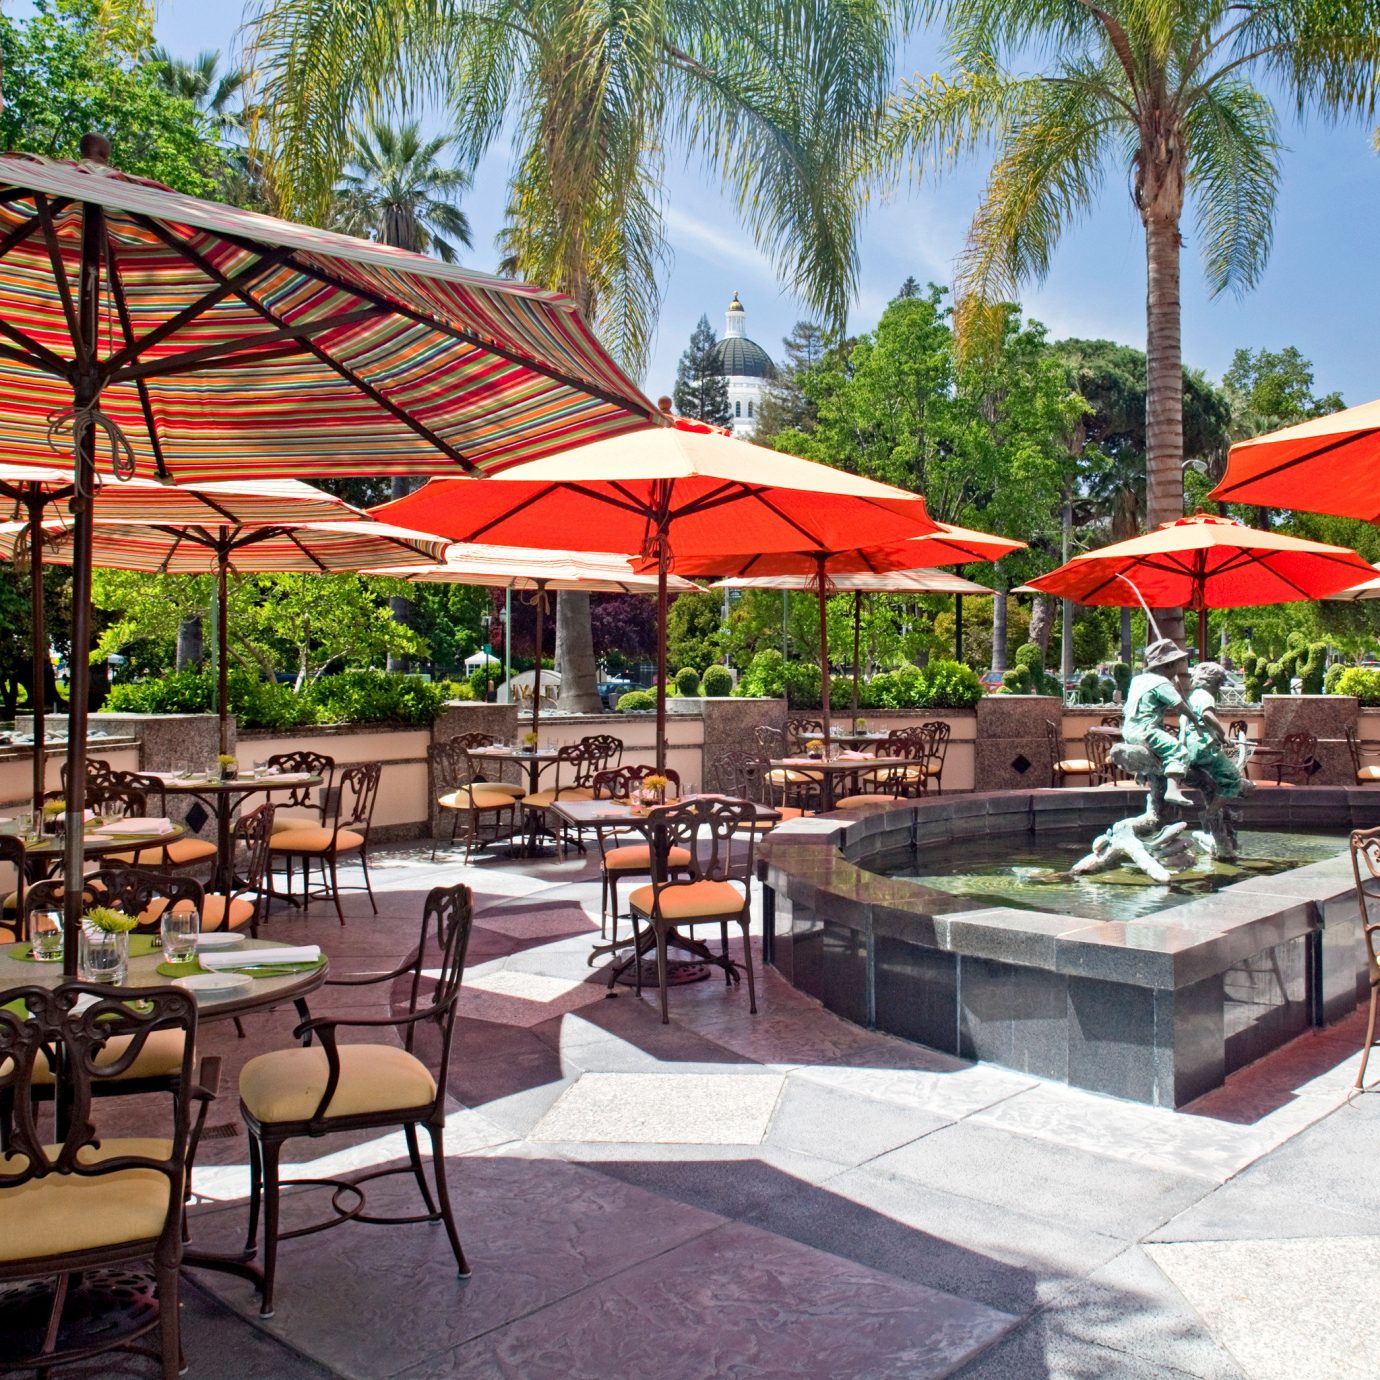 Bar Dining Drink Eat Hip Modern tree chair umbrella Resort restaurant outdoor structure plaza lawn set accessory shade